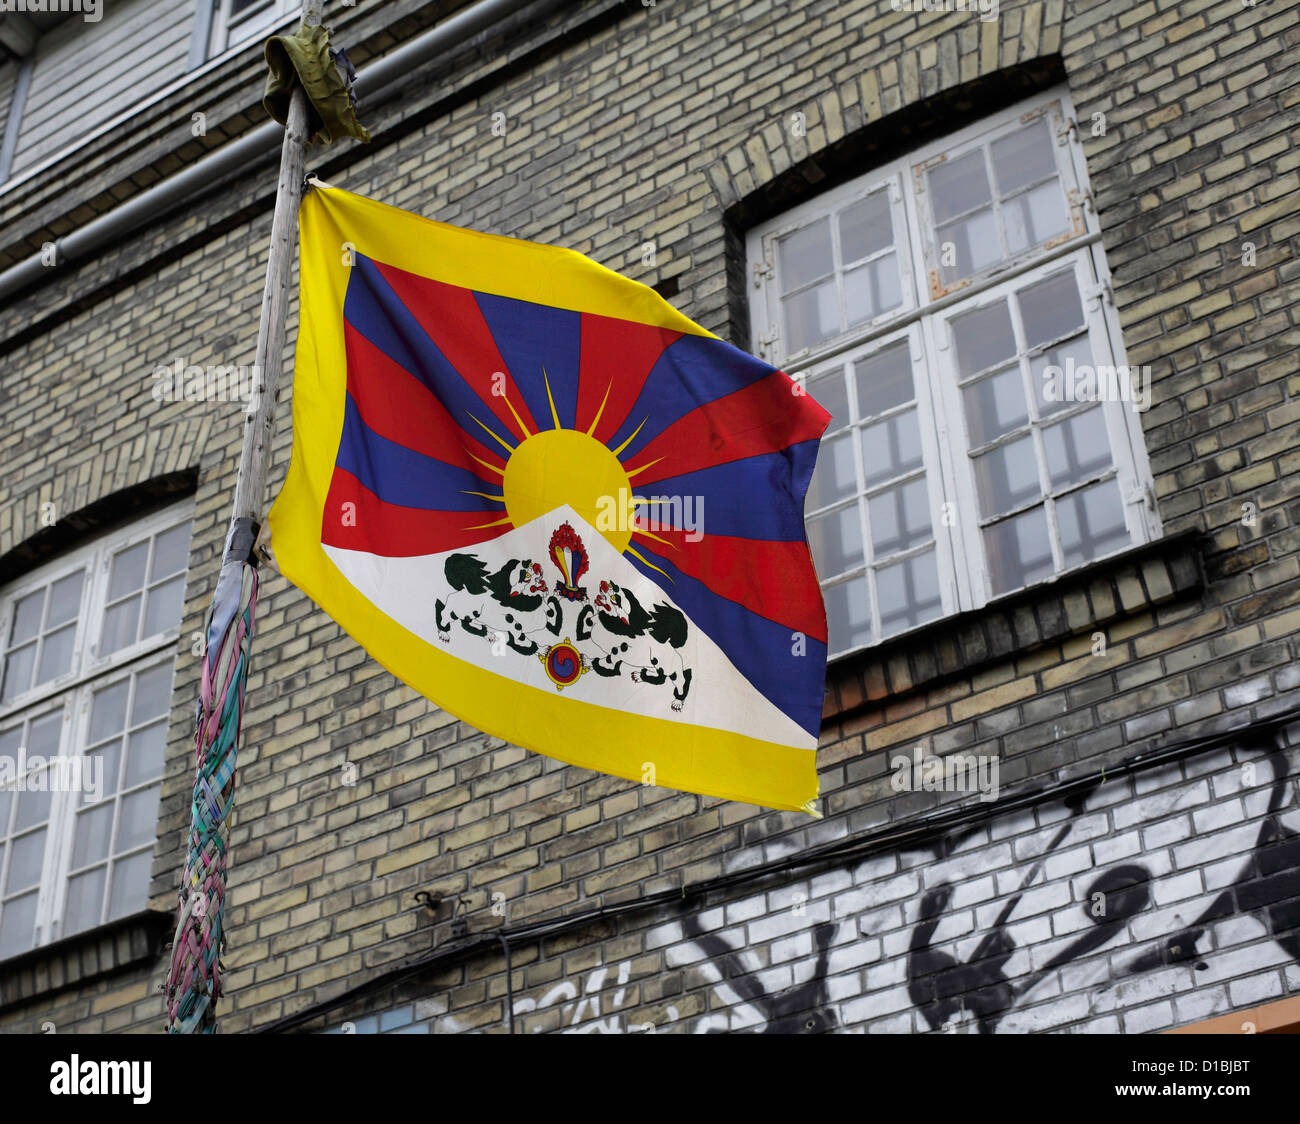 A 'Free Tibet' flag flying outside a building in Christiania, Copenhagen, Denmark. Stock Photo